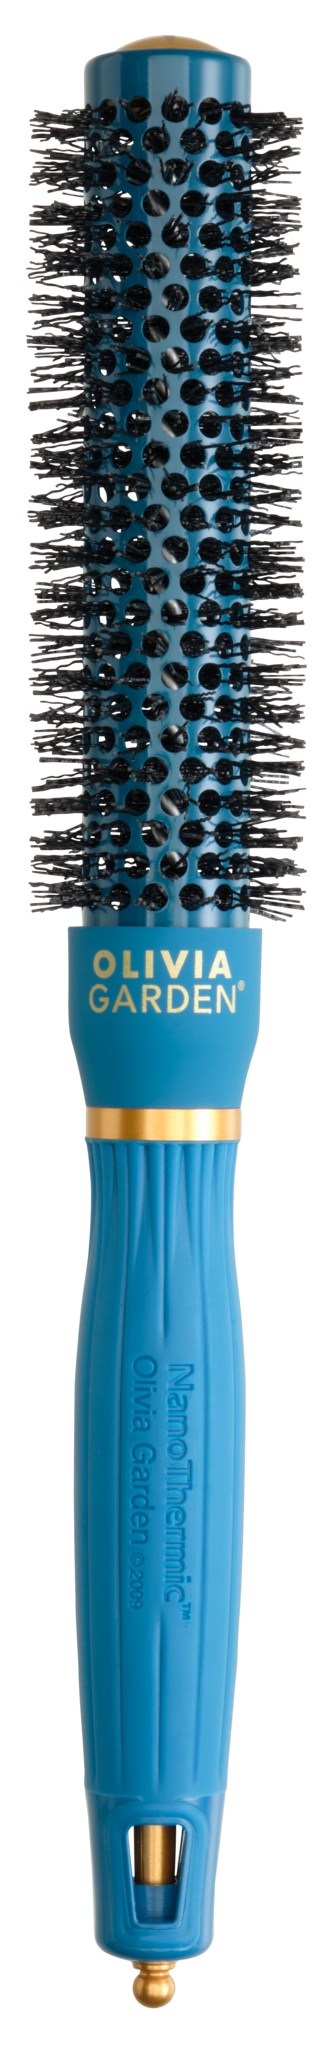 Olivia Garden Nano Thermic Speed Peacock Round Brush 